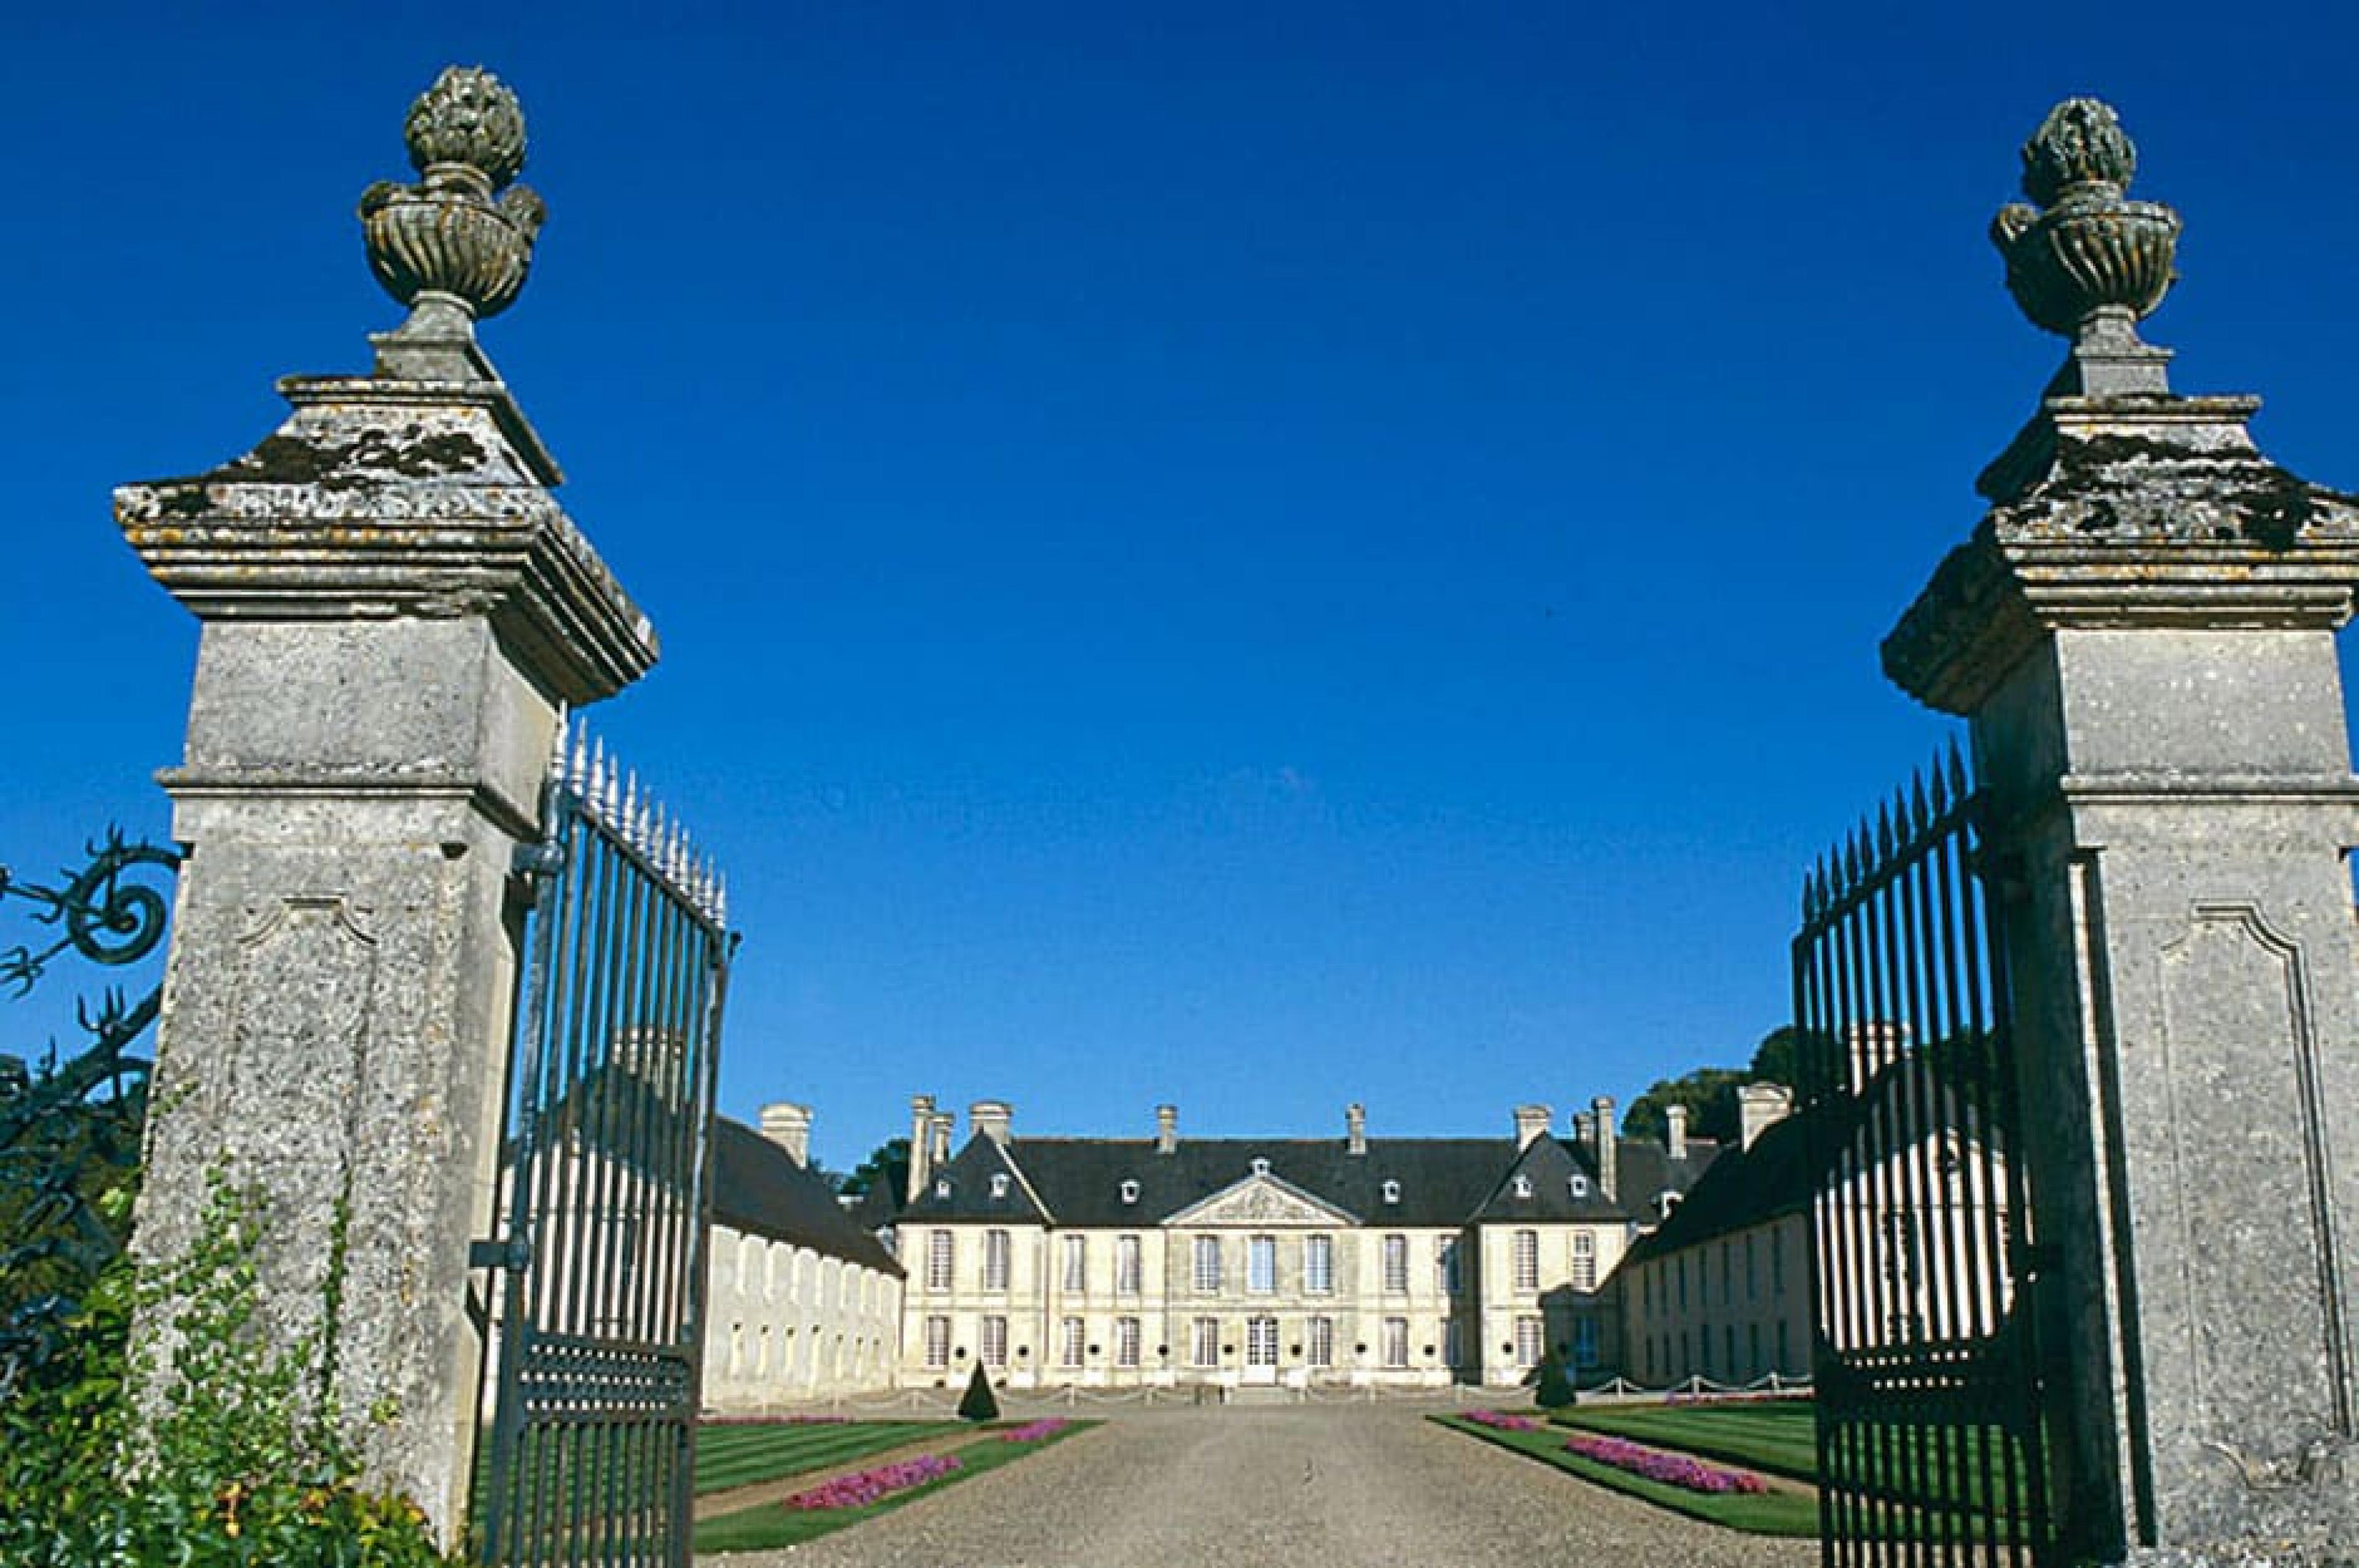 Facade -Chateau d’Audrieu , Normandy, France